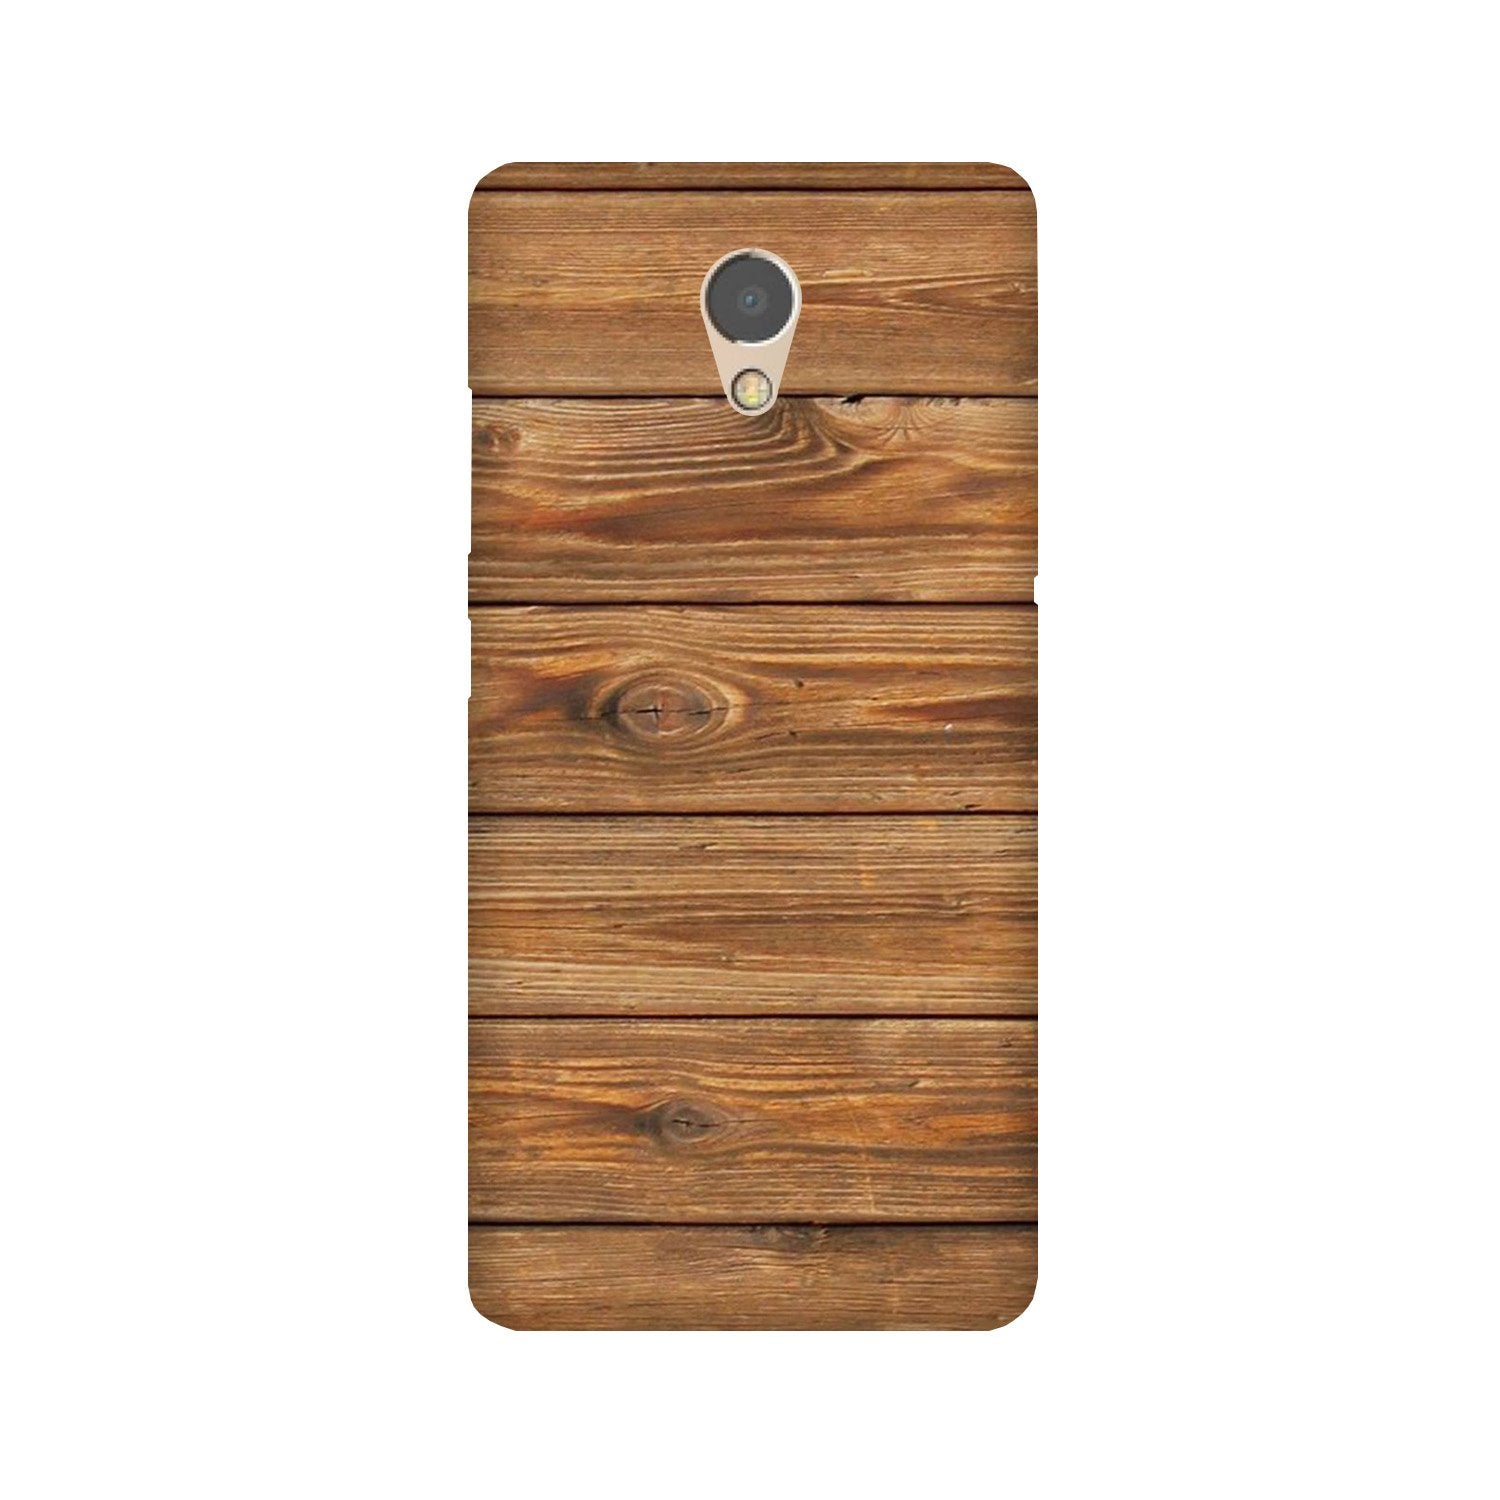 Wooden Look Case for Lenovo P2(Design - 113)